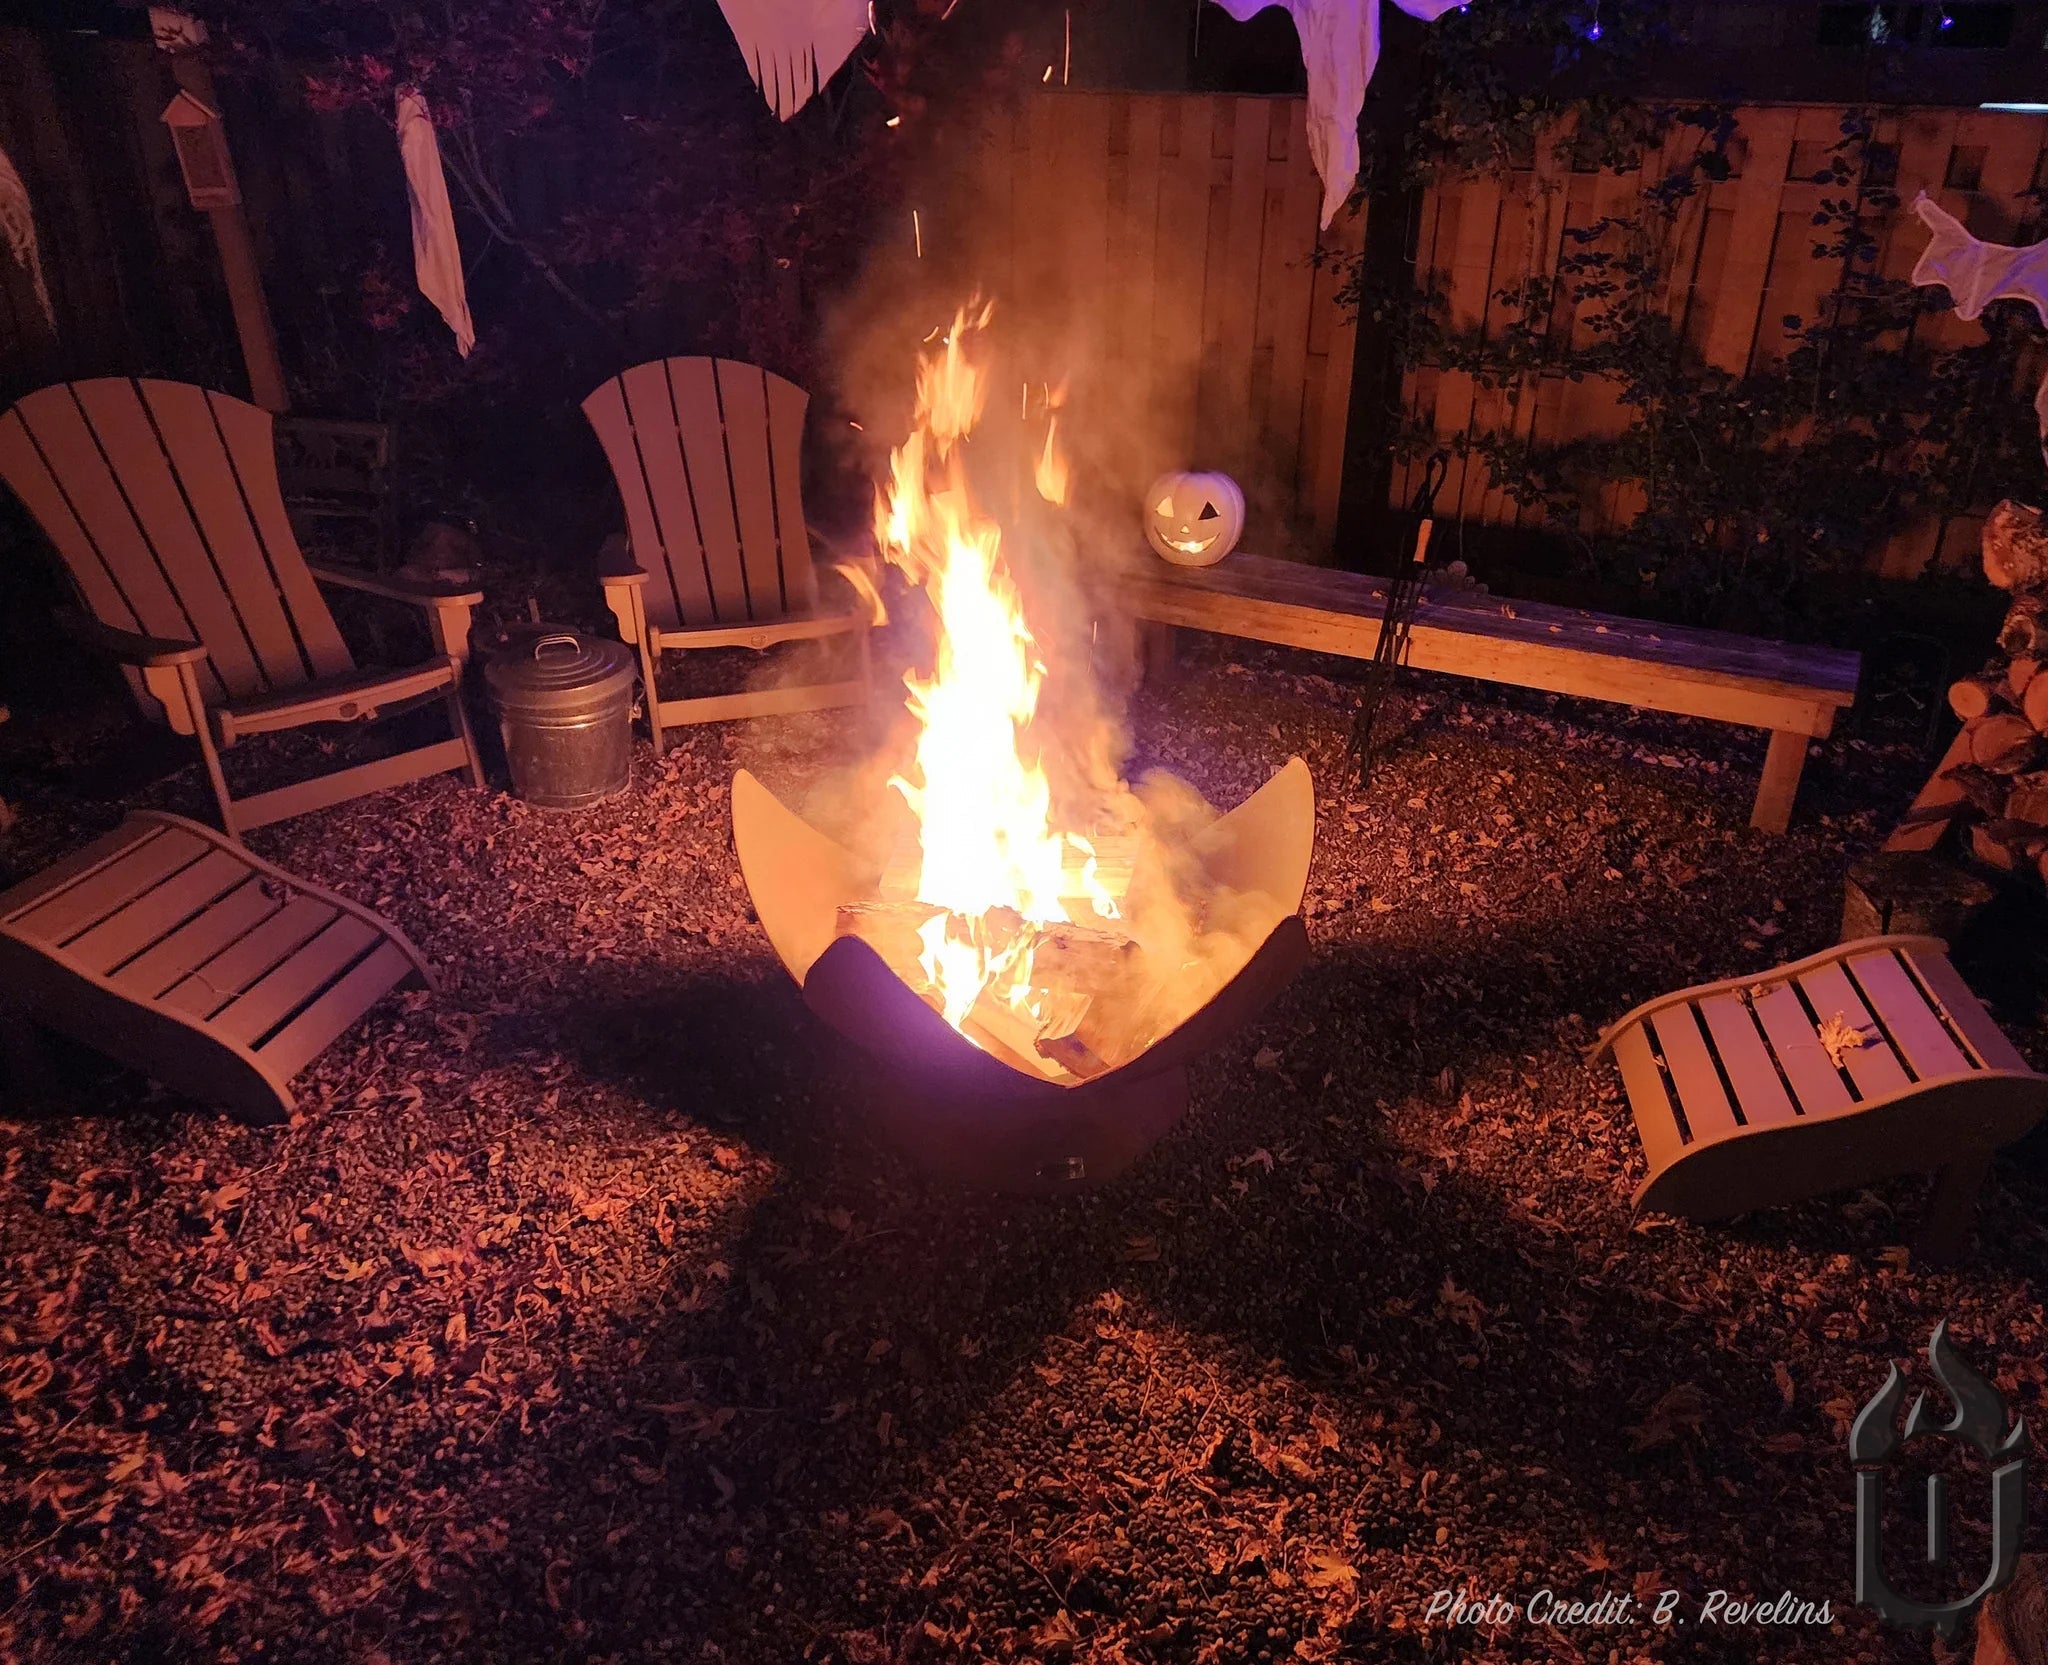 Ohio Flame Fire Flower Artisan Fire Bowl- Lifestyle Backyard